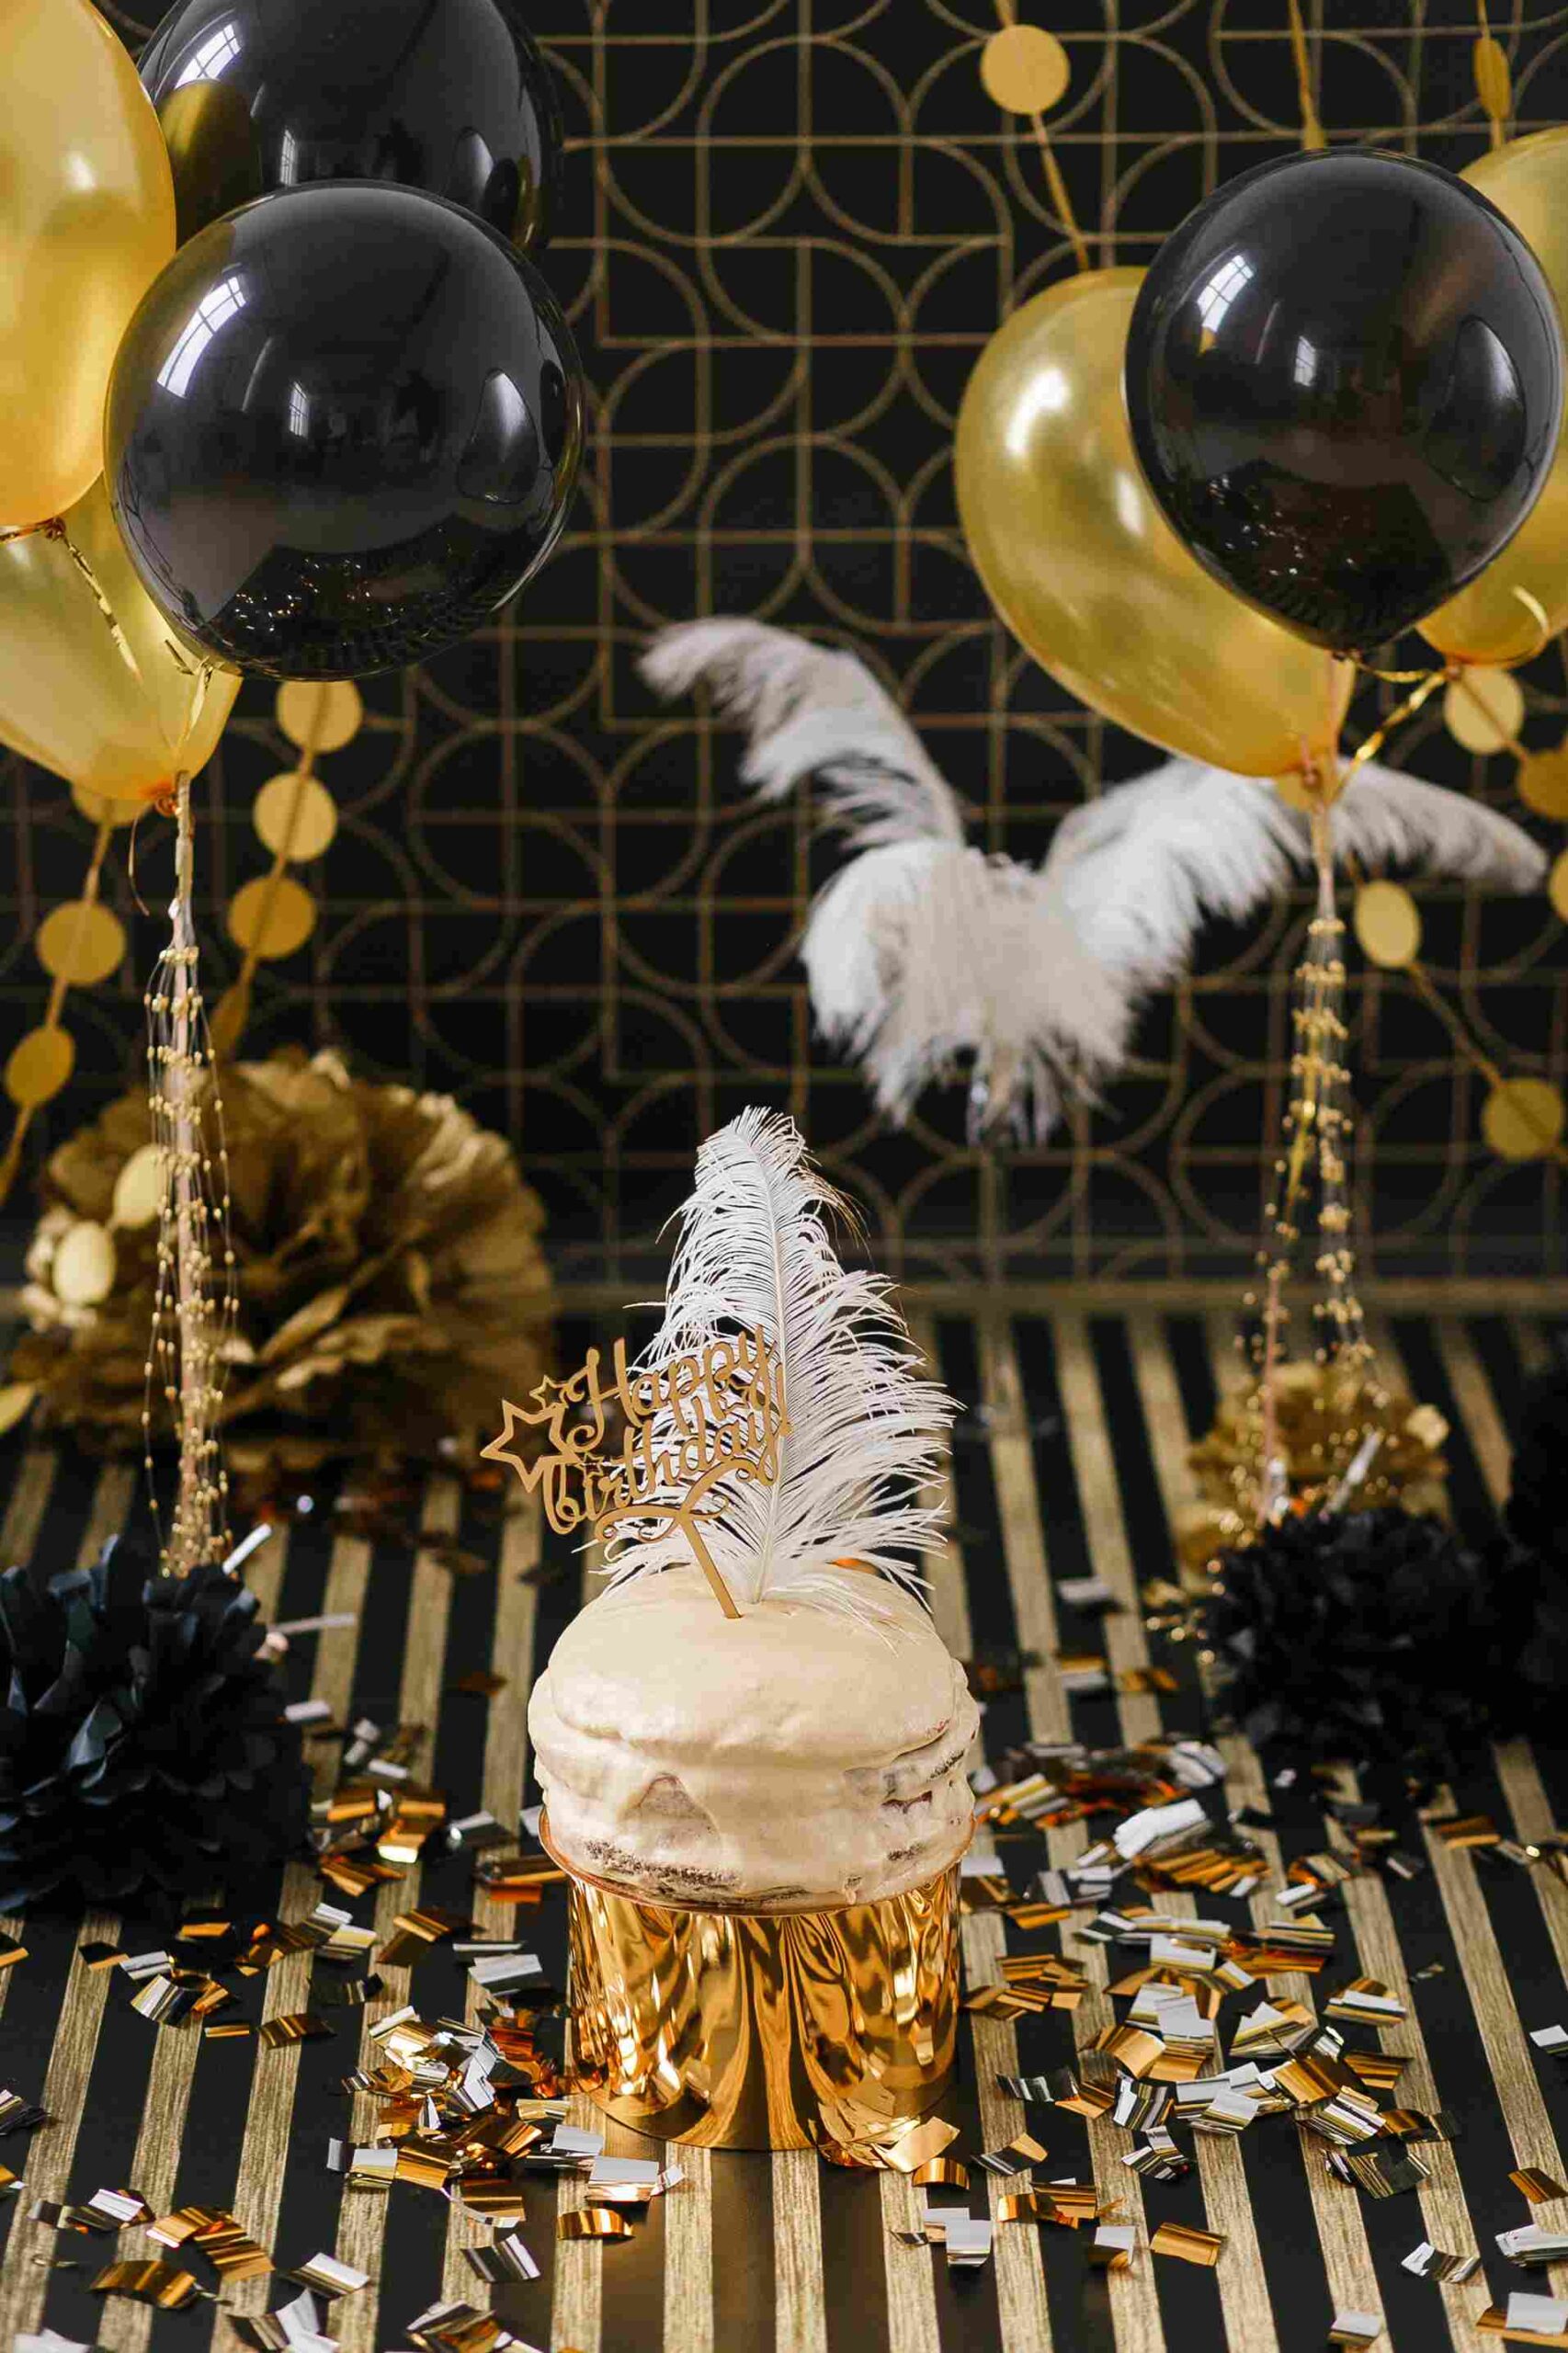 birthday-party-cake-with-golden-black-decor-various-balloons_11zon